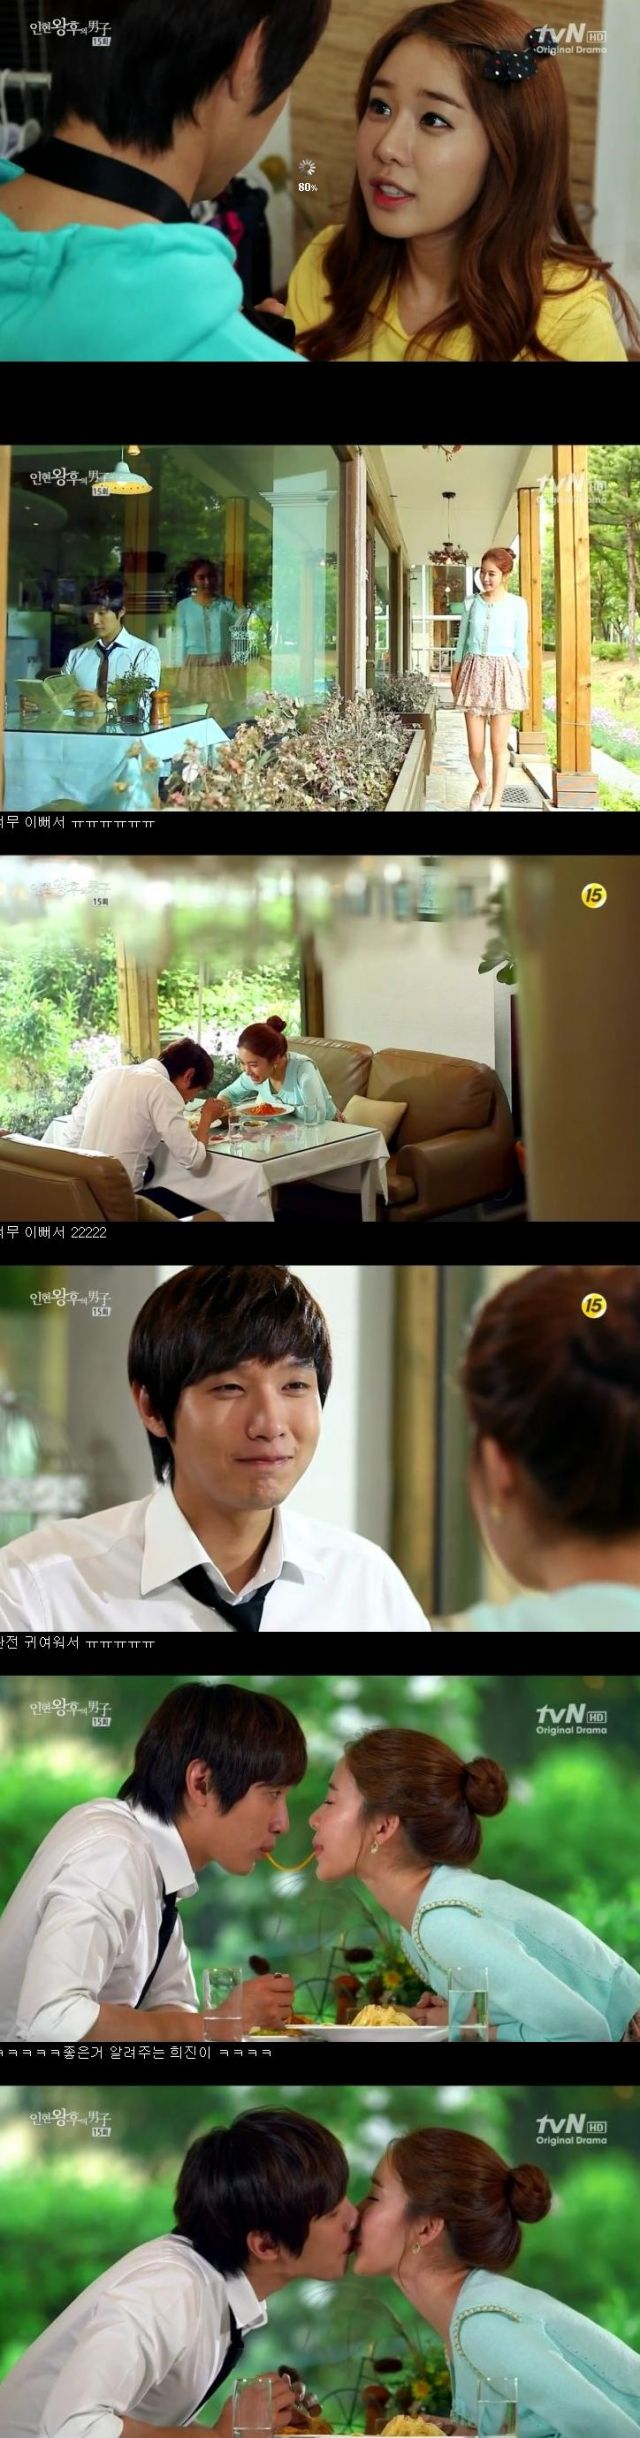 episode 15 captures for the Korean drama 'Queen In-hyun's Man'